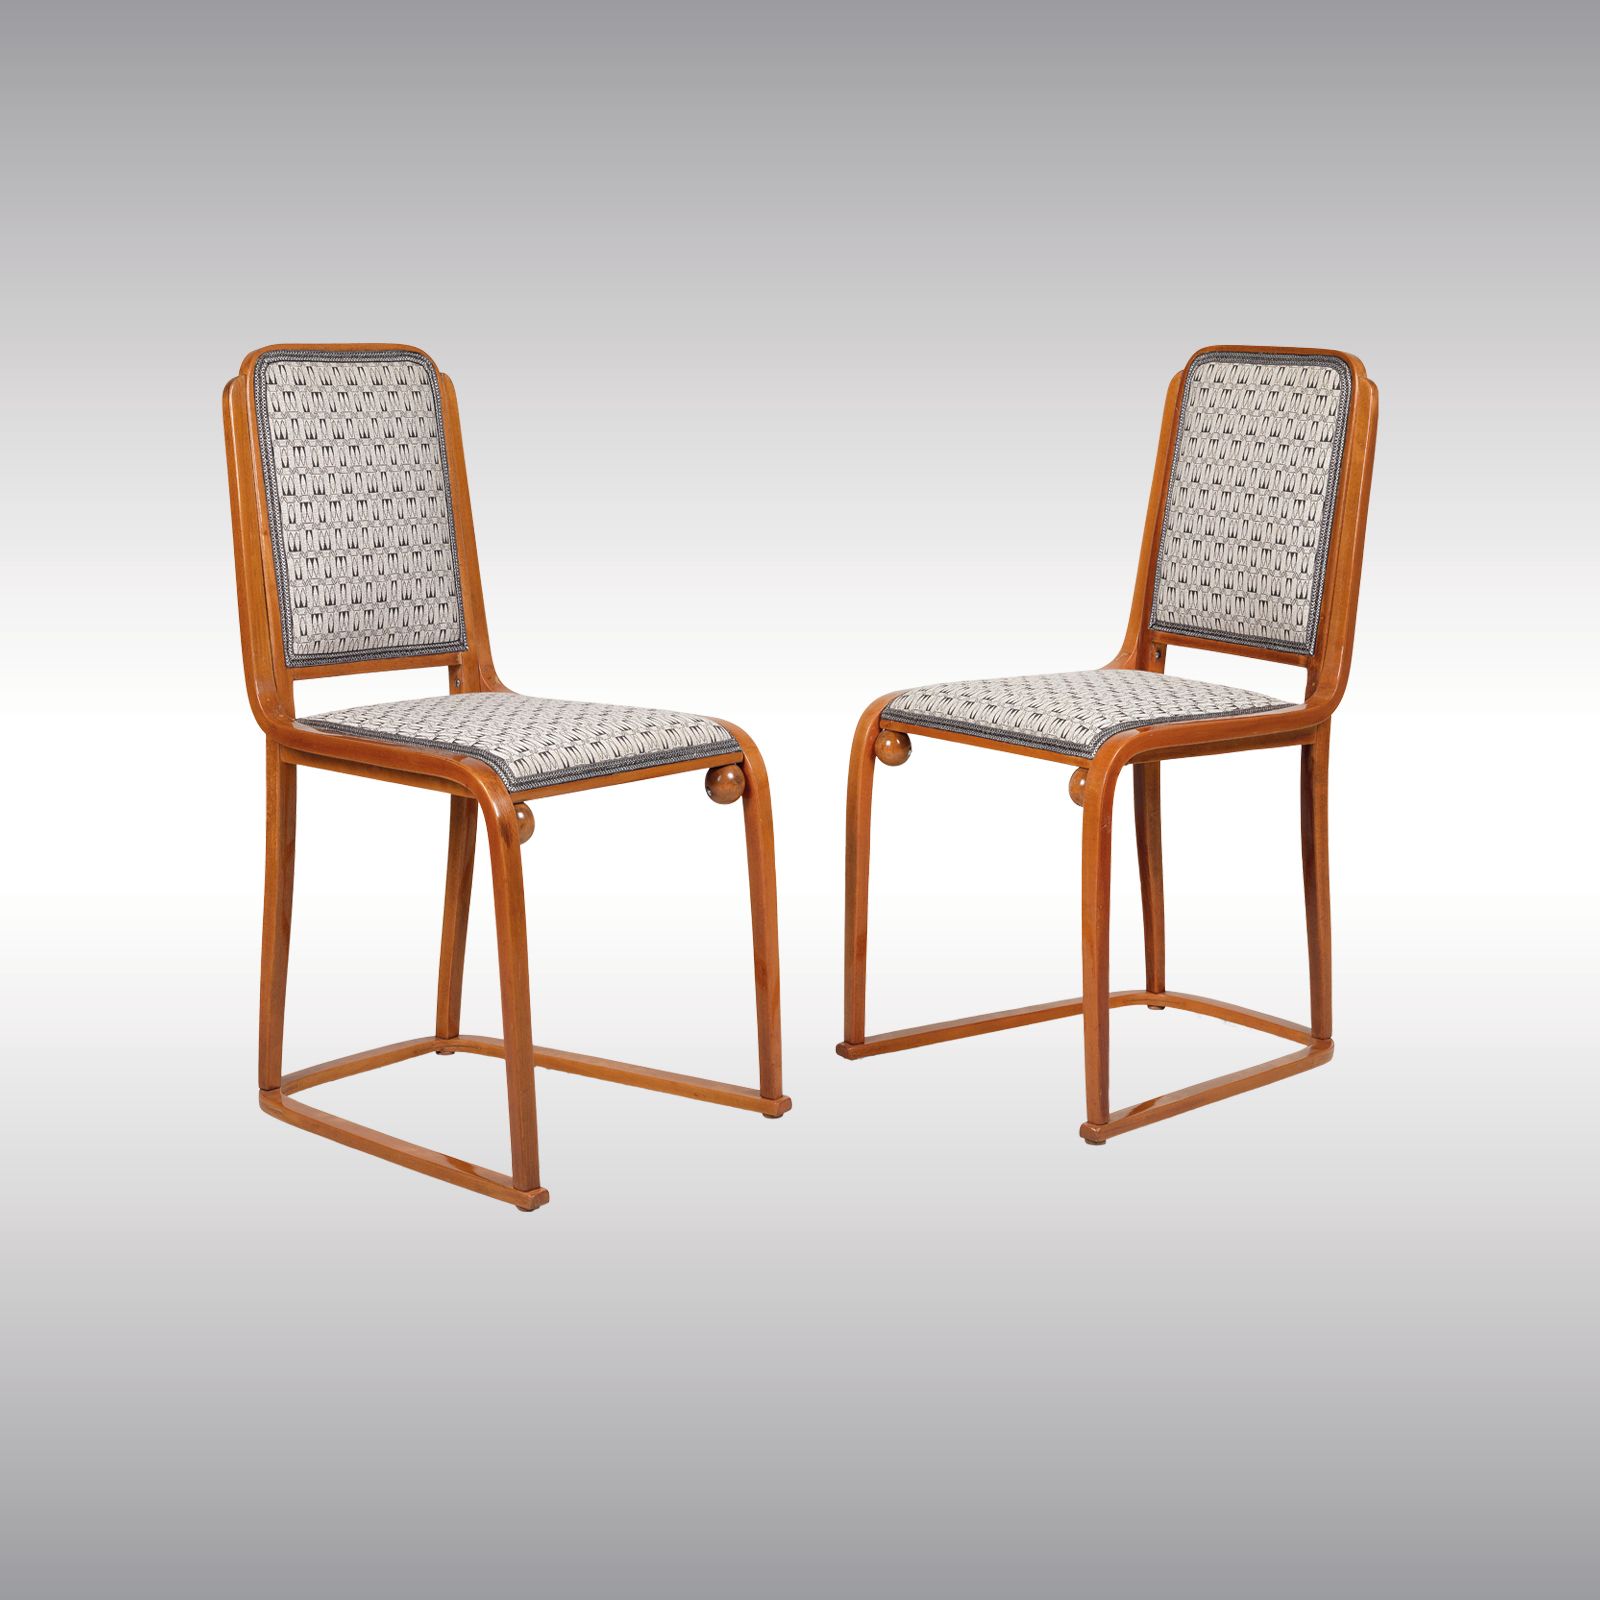 WOKA LAMPS VIENNA - OrderNr.: 80042|Pair of Josef Hoffmann Chairs 1905 J&J Kohn #725B - Design: Josef Hoffmann